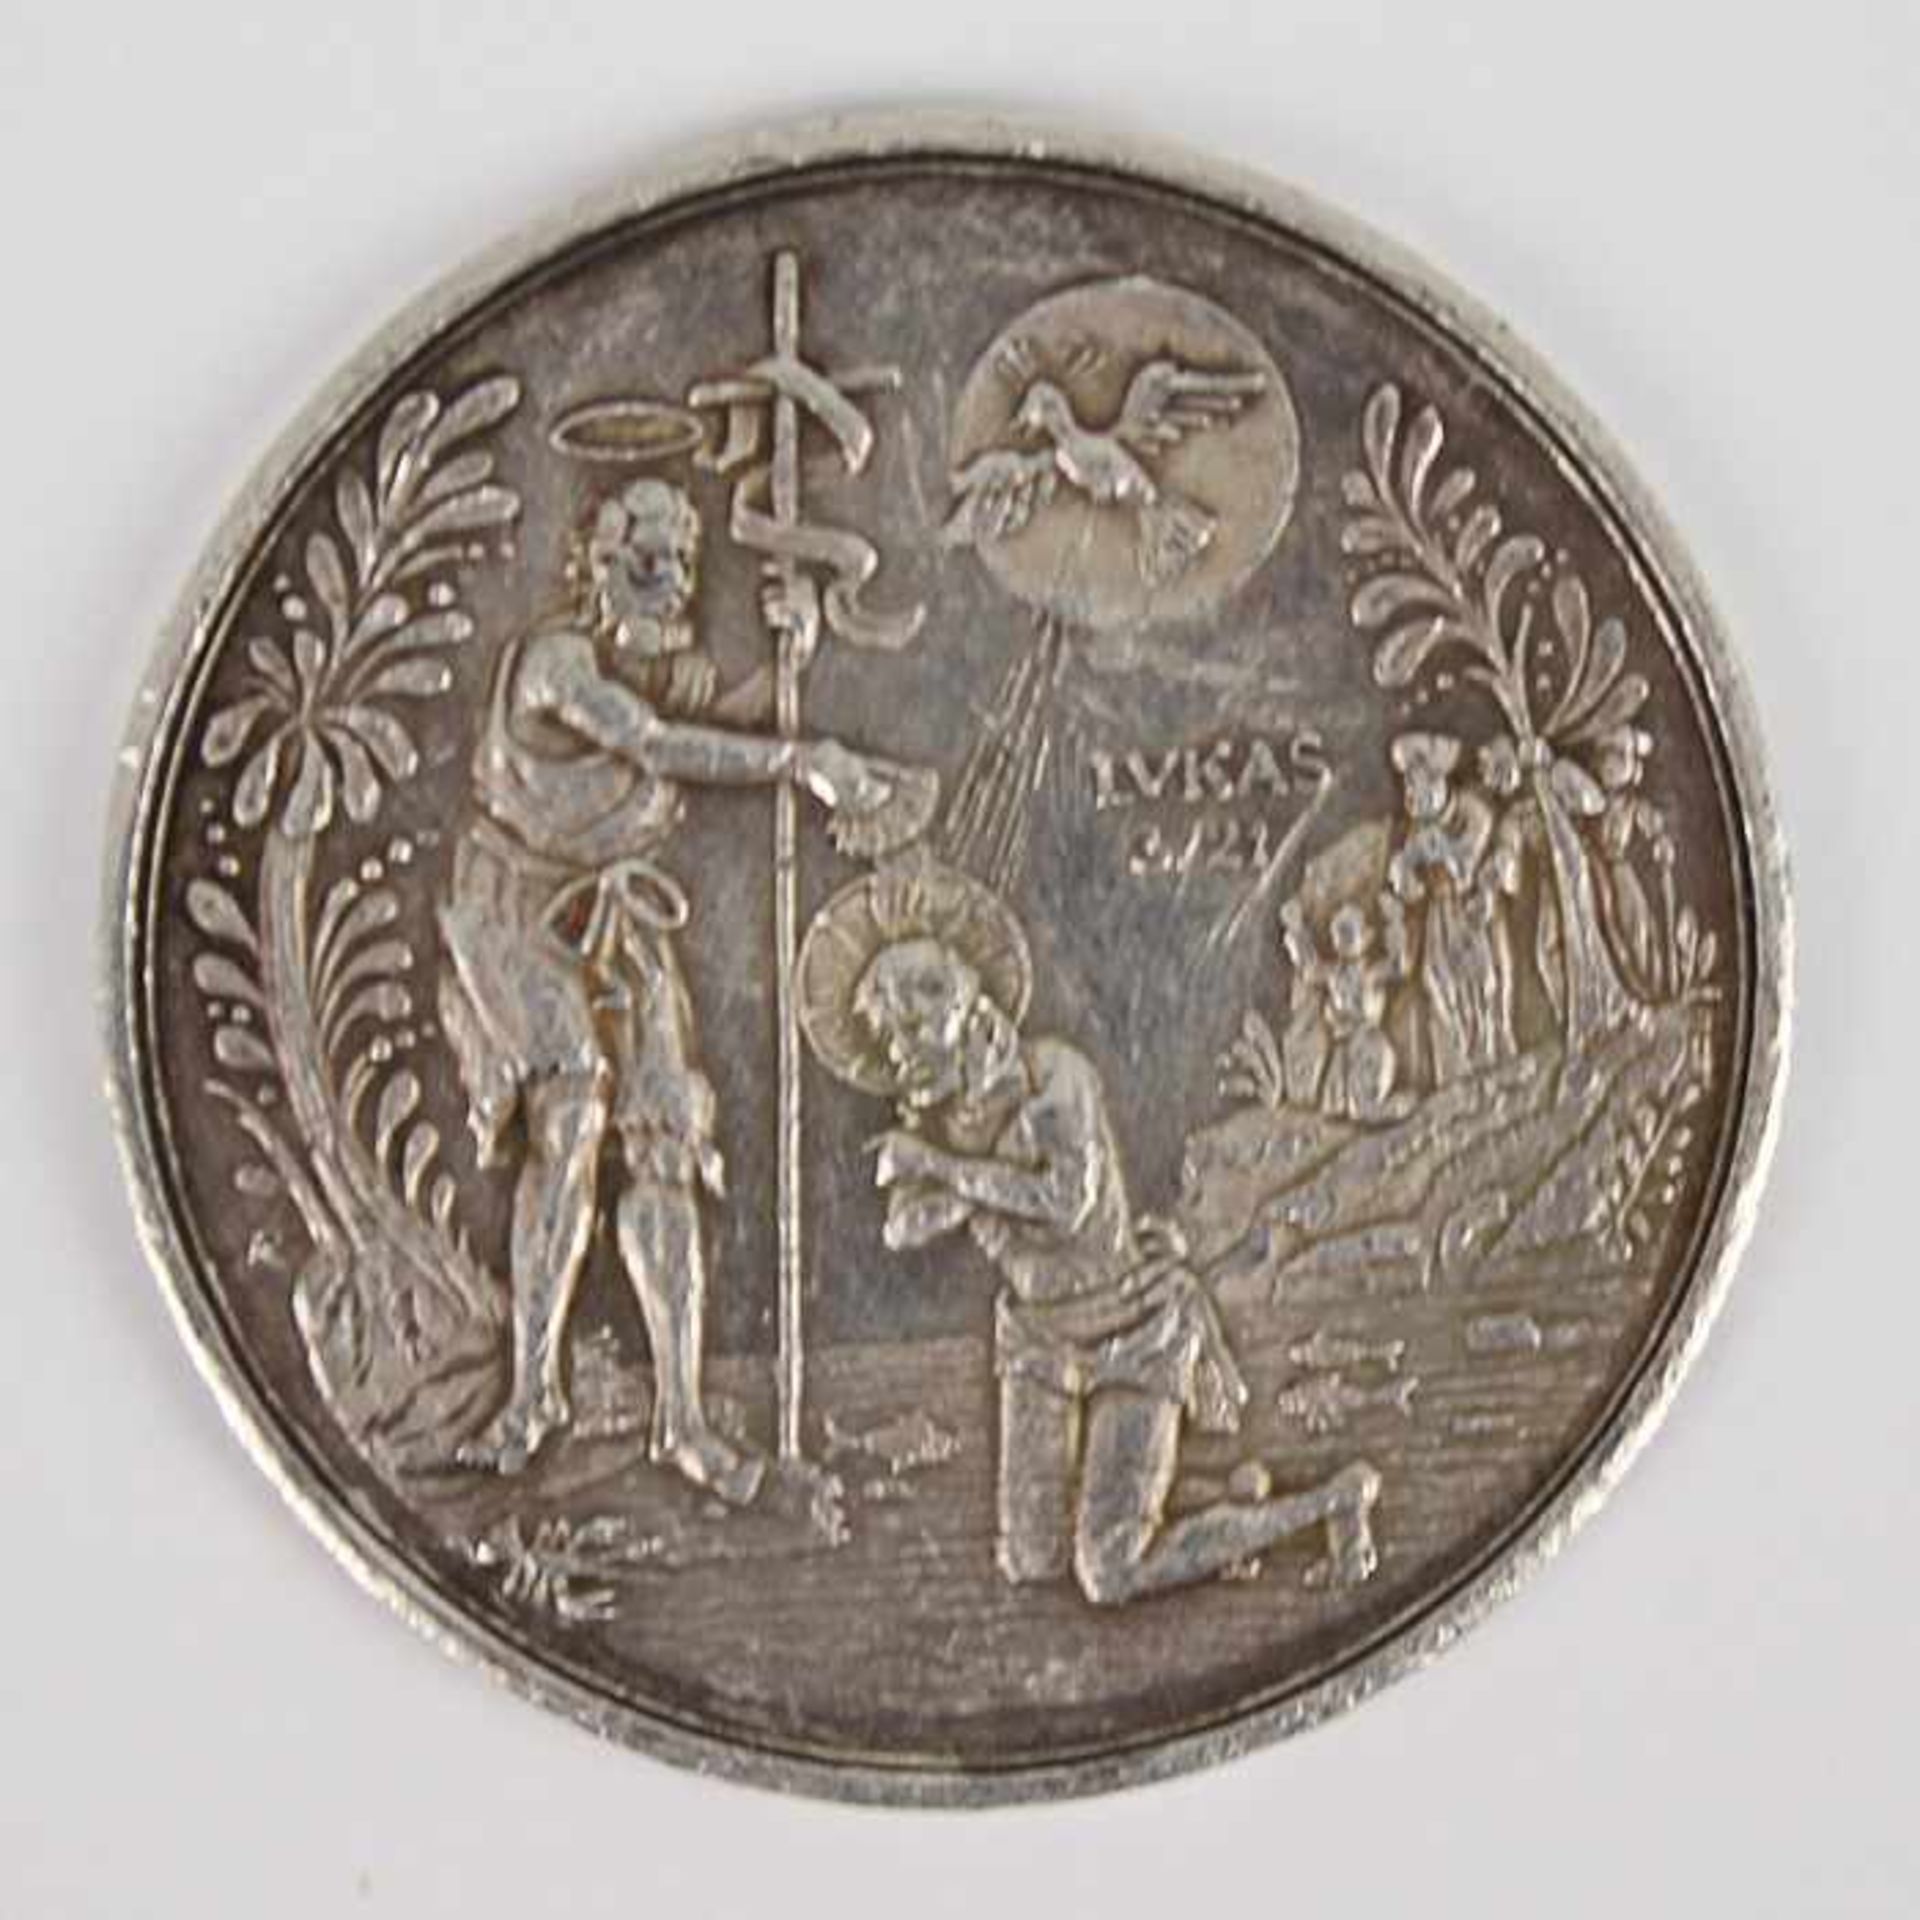 SilbermedailleSi 999, Medaillenkunst, Taufe im Jordan, Lamm mit Fahne, G 19,8 g, D 4 cm, vz